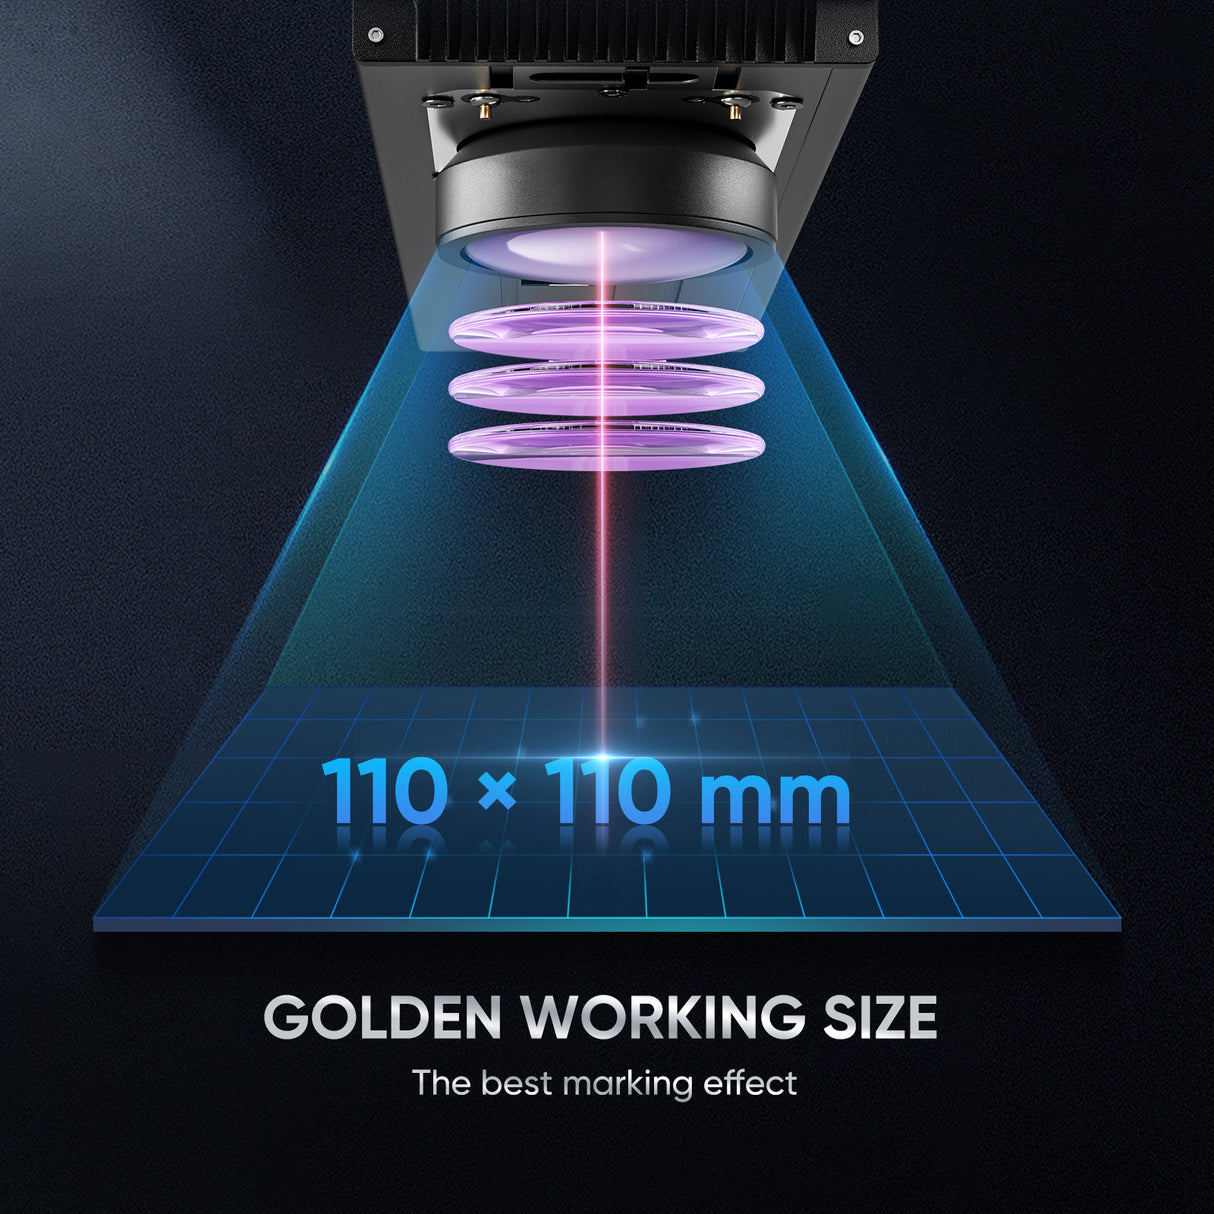 Monport GA 20W Integrated Fiber Laser Engraver & Marking Machines with Auto Focus